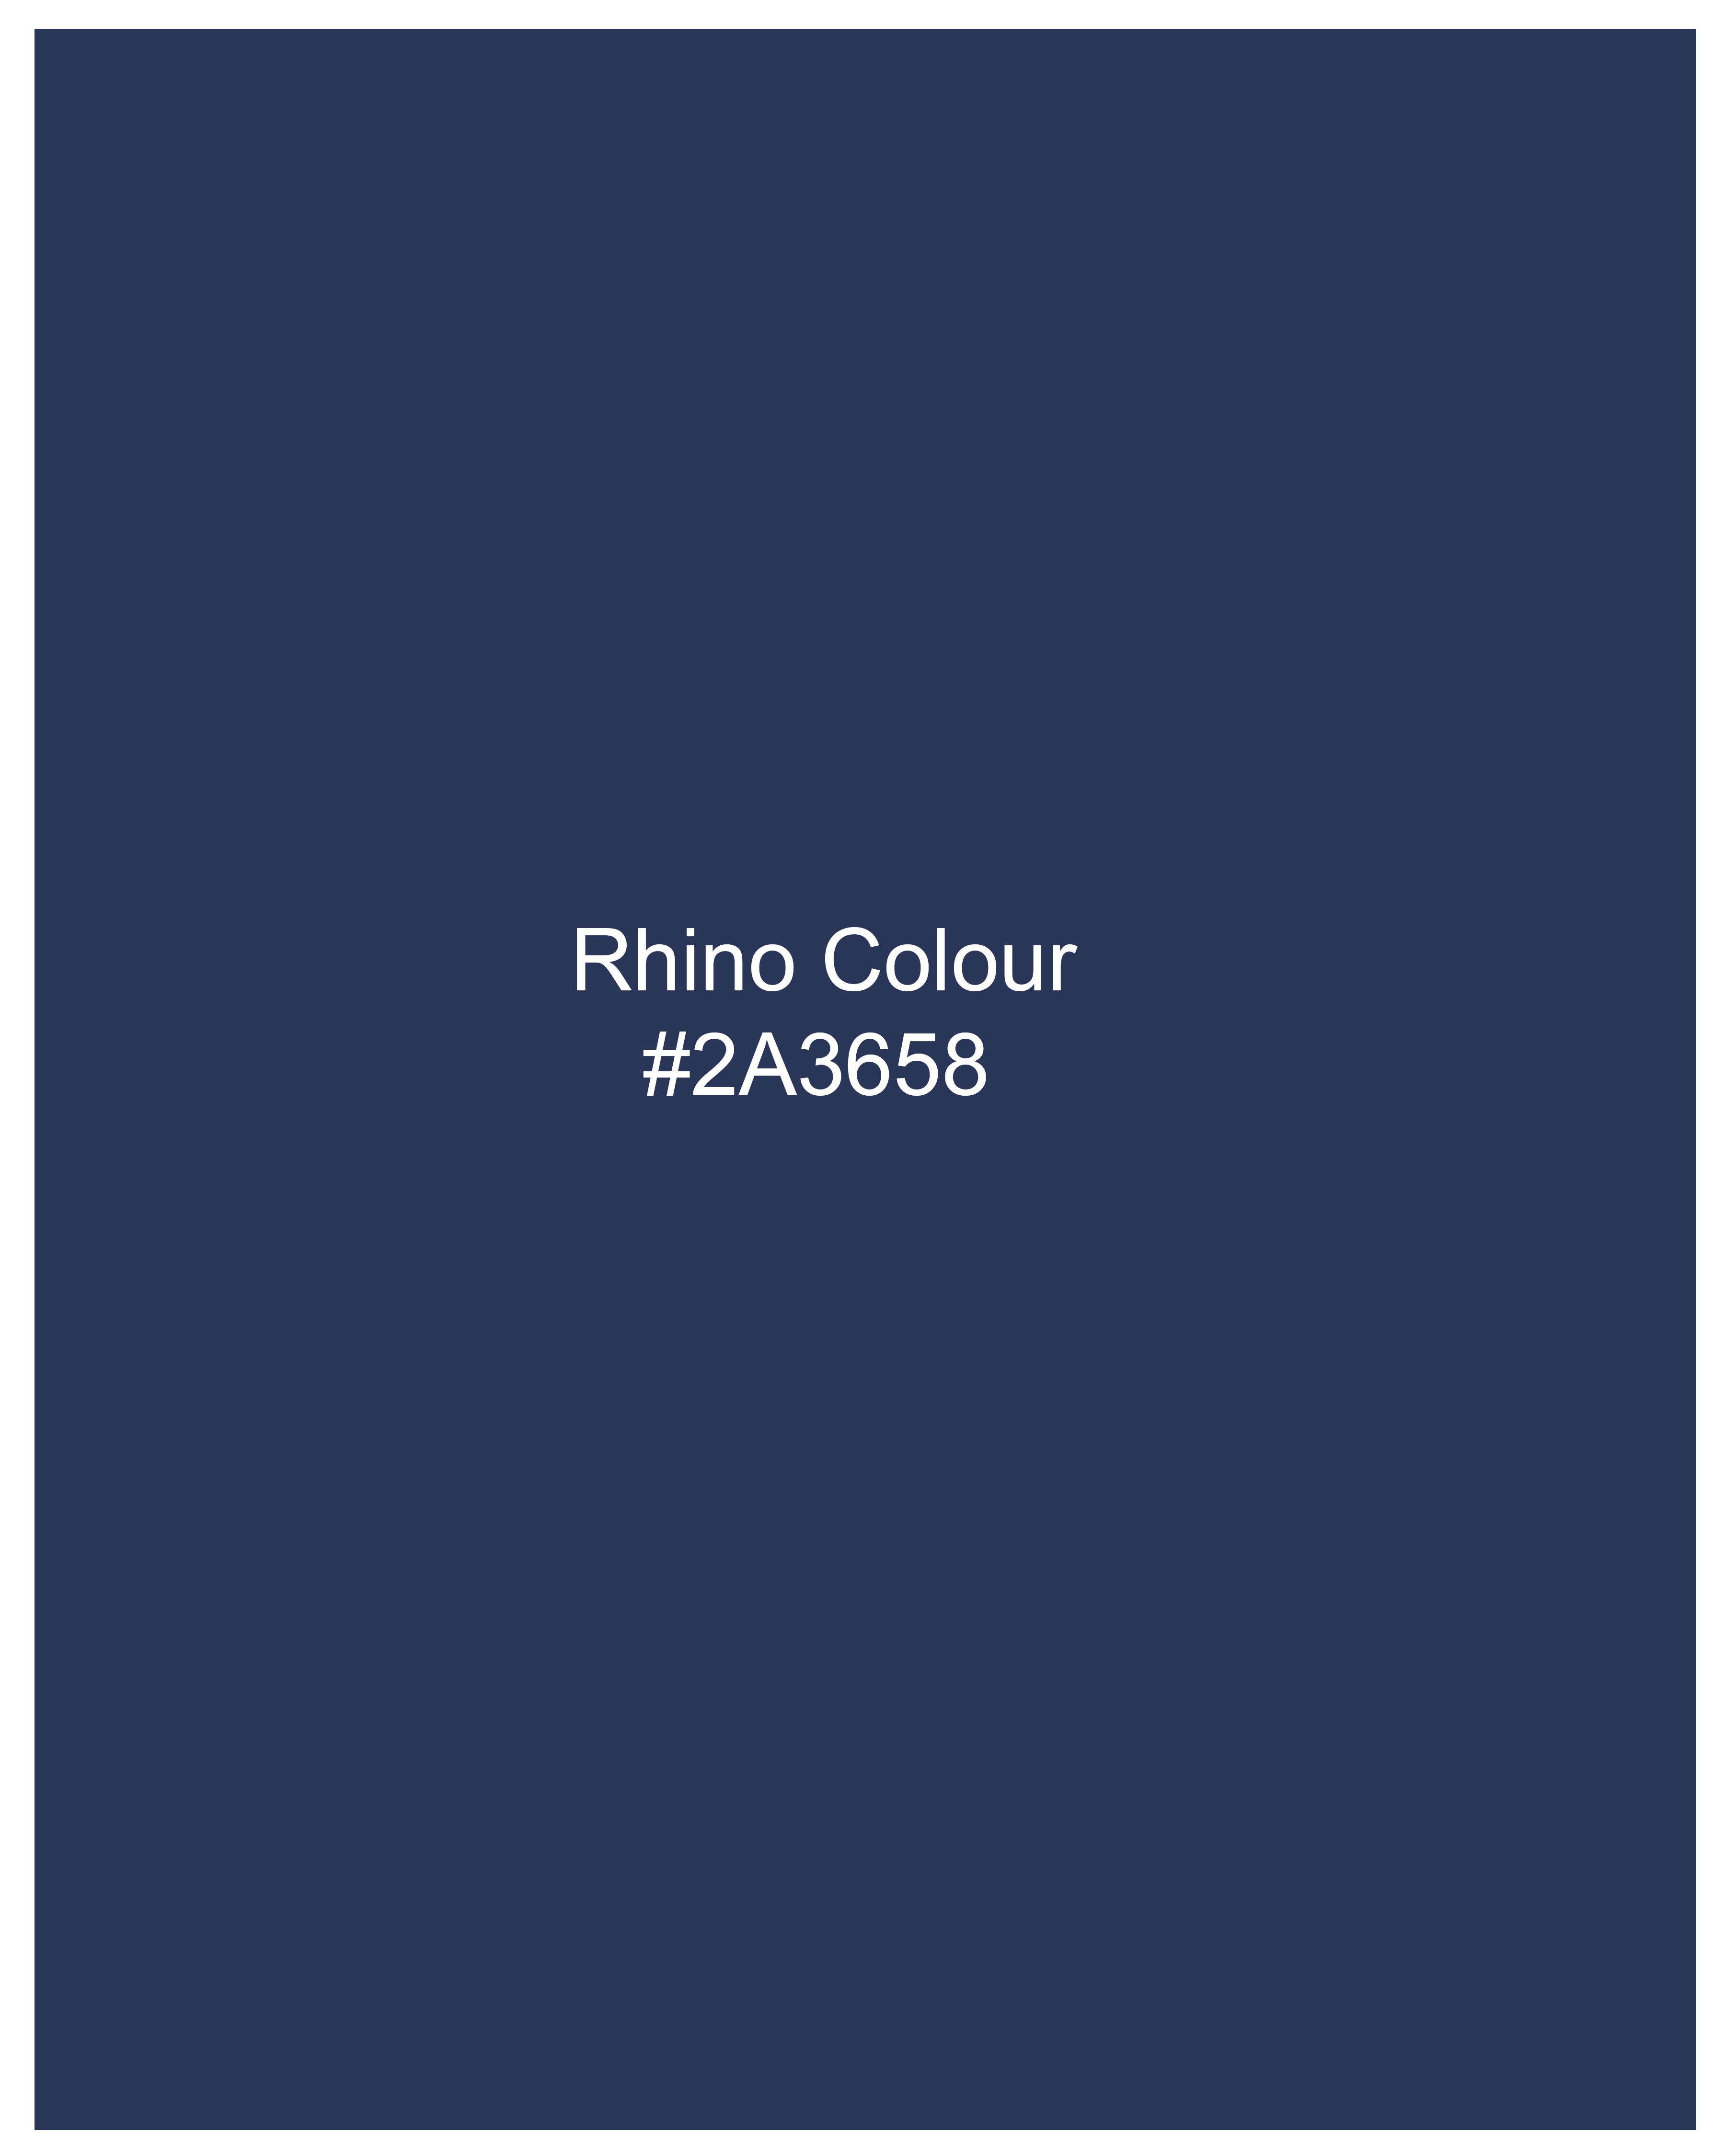 Rhino Blue Jacquard Textured Premium Giza Cotton Shirt 9557-BD-BLK-38, 9557-BD-BLK-H-38, 9557-BD-BLK-39, 9557-BD-BLK-H-39, 9557-BD-BLK-40, 9557-BD-BLK-H-40, 9557-BD-BLK-42, 9557-BD-BLK-H-42, 9557-BD-BLK-44, 9557-BD-BLK-H-44, 9557-BD-BLK-46, 9557-BD-BLK-H-46, 9557-BD-BLK-48, 9557-BD-BLK-H-48, 9557-BD-BLK-50, 9557-BD-BLK-H-50, 9557-BD-BLK-52, 9557-BD-BLK-H-52